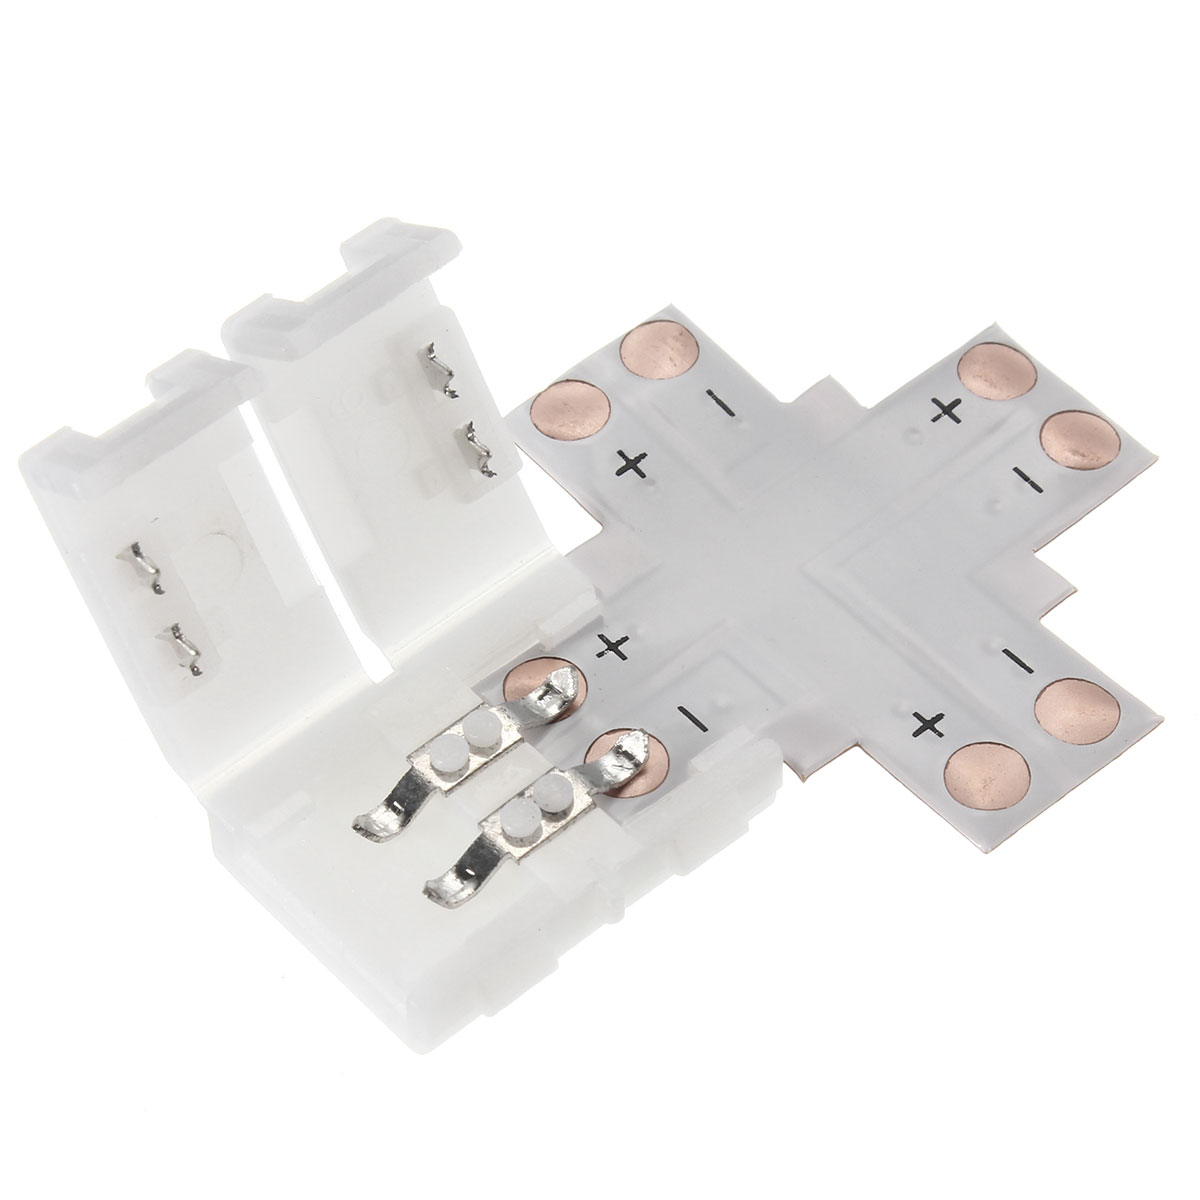 10mm-TL-Shape-2-Pin-5050-PCB-LED-Strip-Corner-Connector-for-Single-Color-Lighting-1087475-4